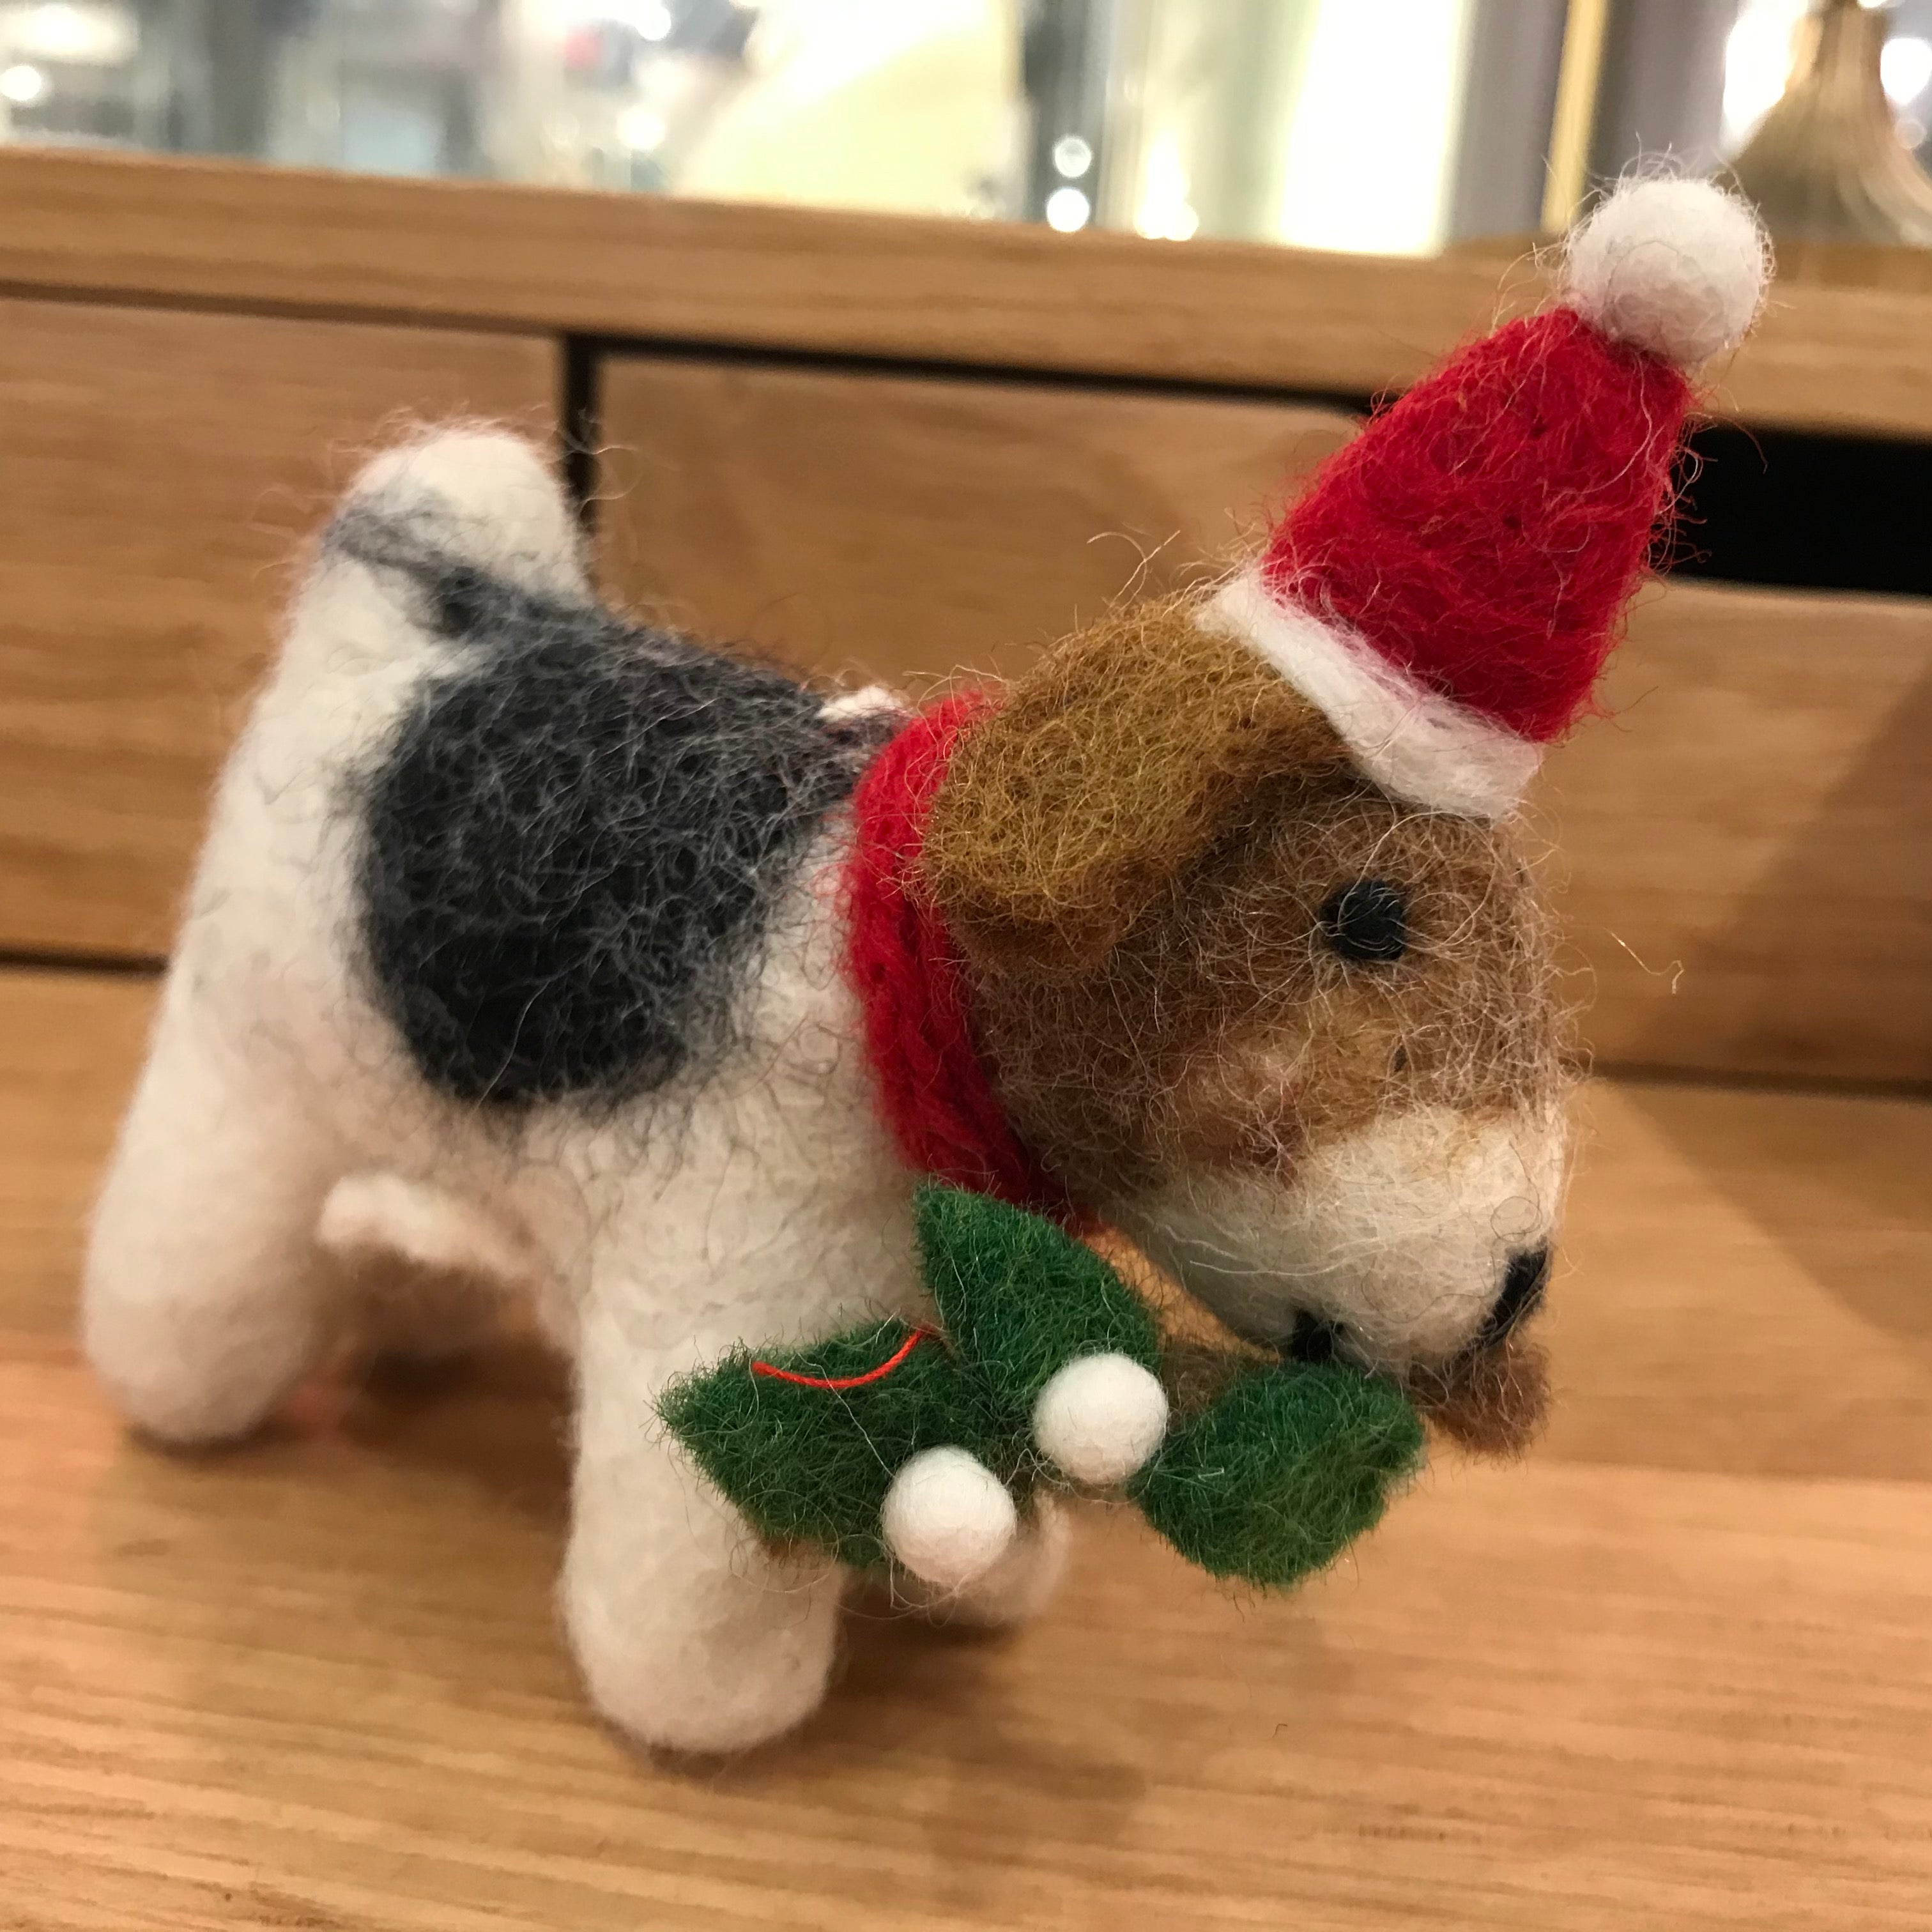 Fox Terrier With Mistletoe Decoration - The Nancy Smillie Shop - Art, Jewellery & Designer Gifts Glasgow